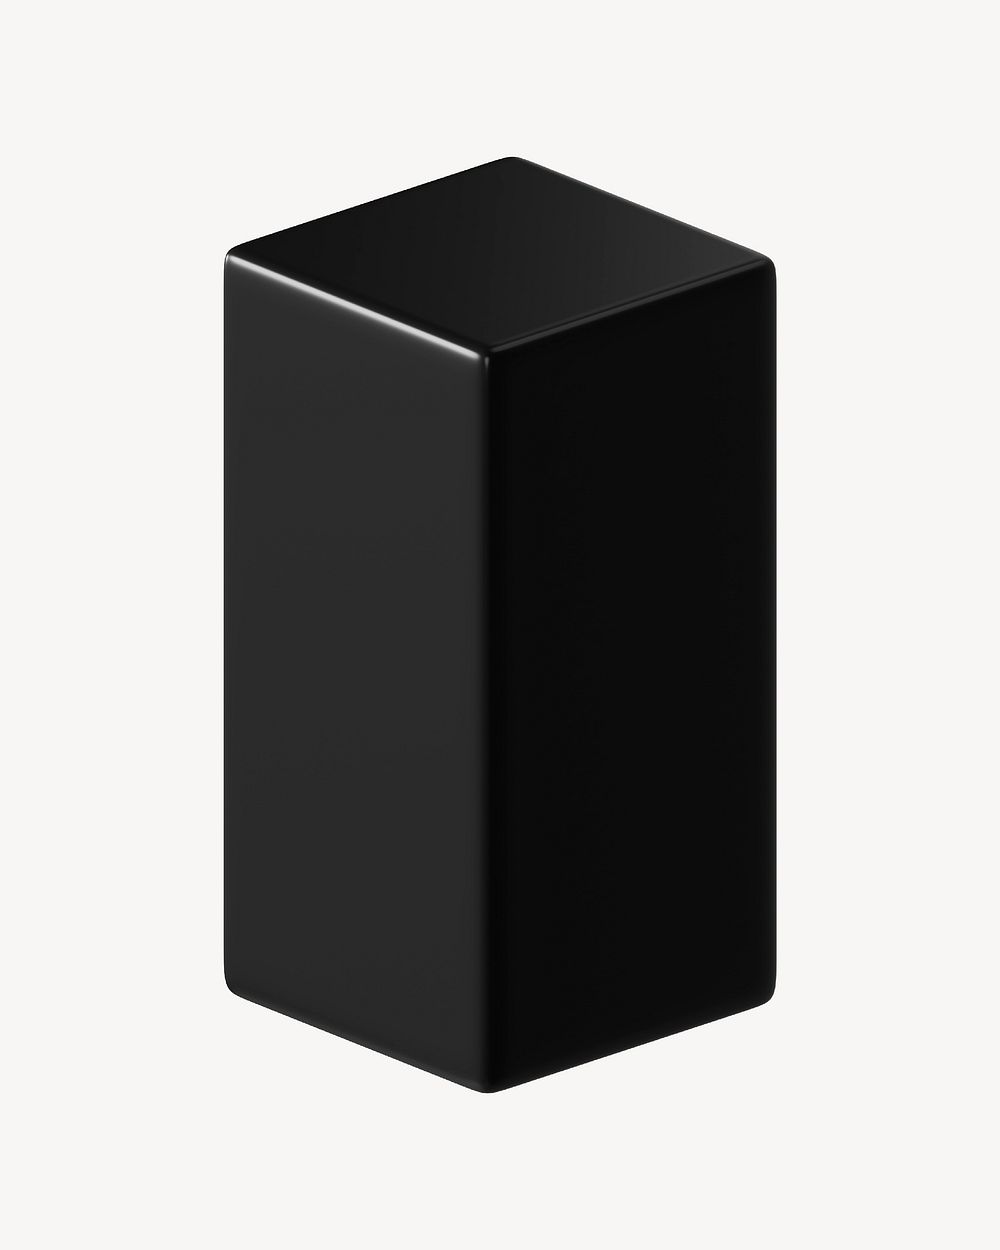 3D black cuboid, geometric shape